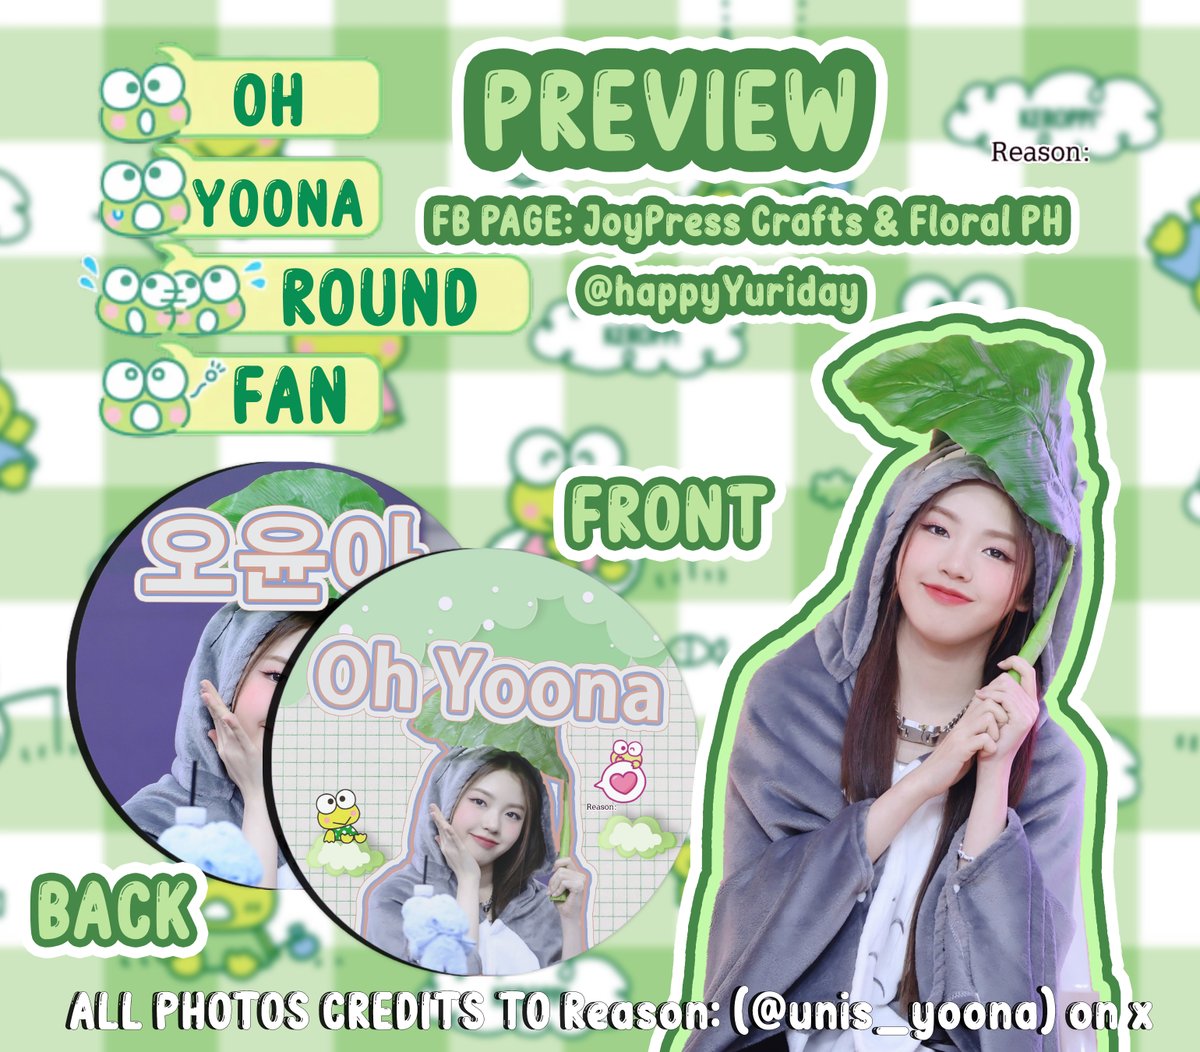 Oh Yoona Round Fan Preview 🐸

Thank you for trusting me.

📍 Paranaque, Metro Manila
All photos credits to the rightful owner (@unis_yoona)

#UNISinManila #UNIS #유니스 #UNI_Story #WE_UNIS #SUPERWOMAN #슈퍼우먼 #HYEONJU #NANA #GEHLEE #ELISIA #KOTOKO #YOONA #YUNHA #SEOWON